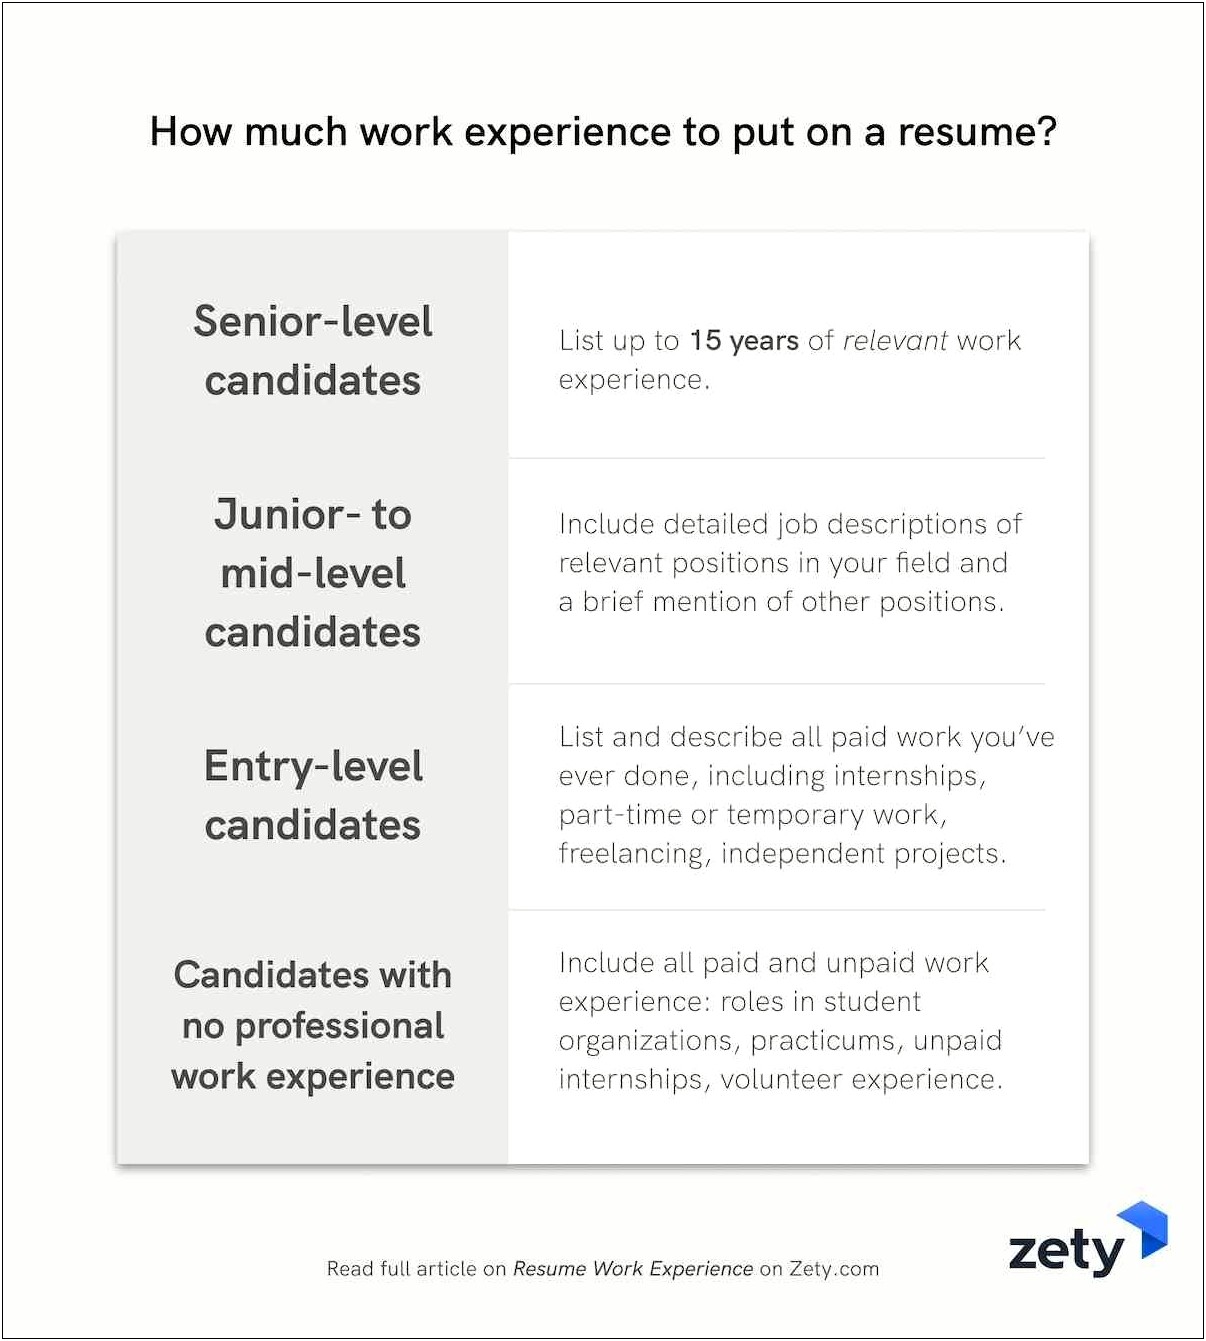 Websites To Compare Resume And Job Description